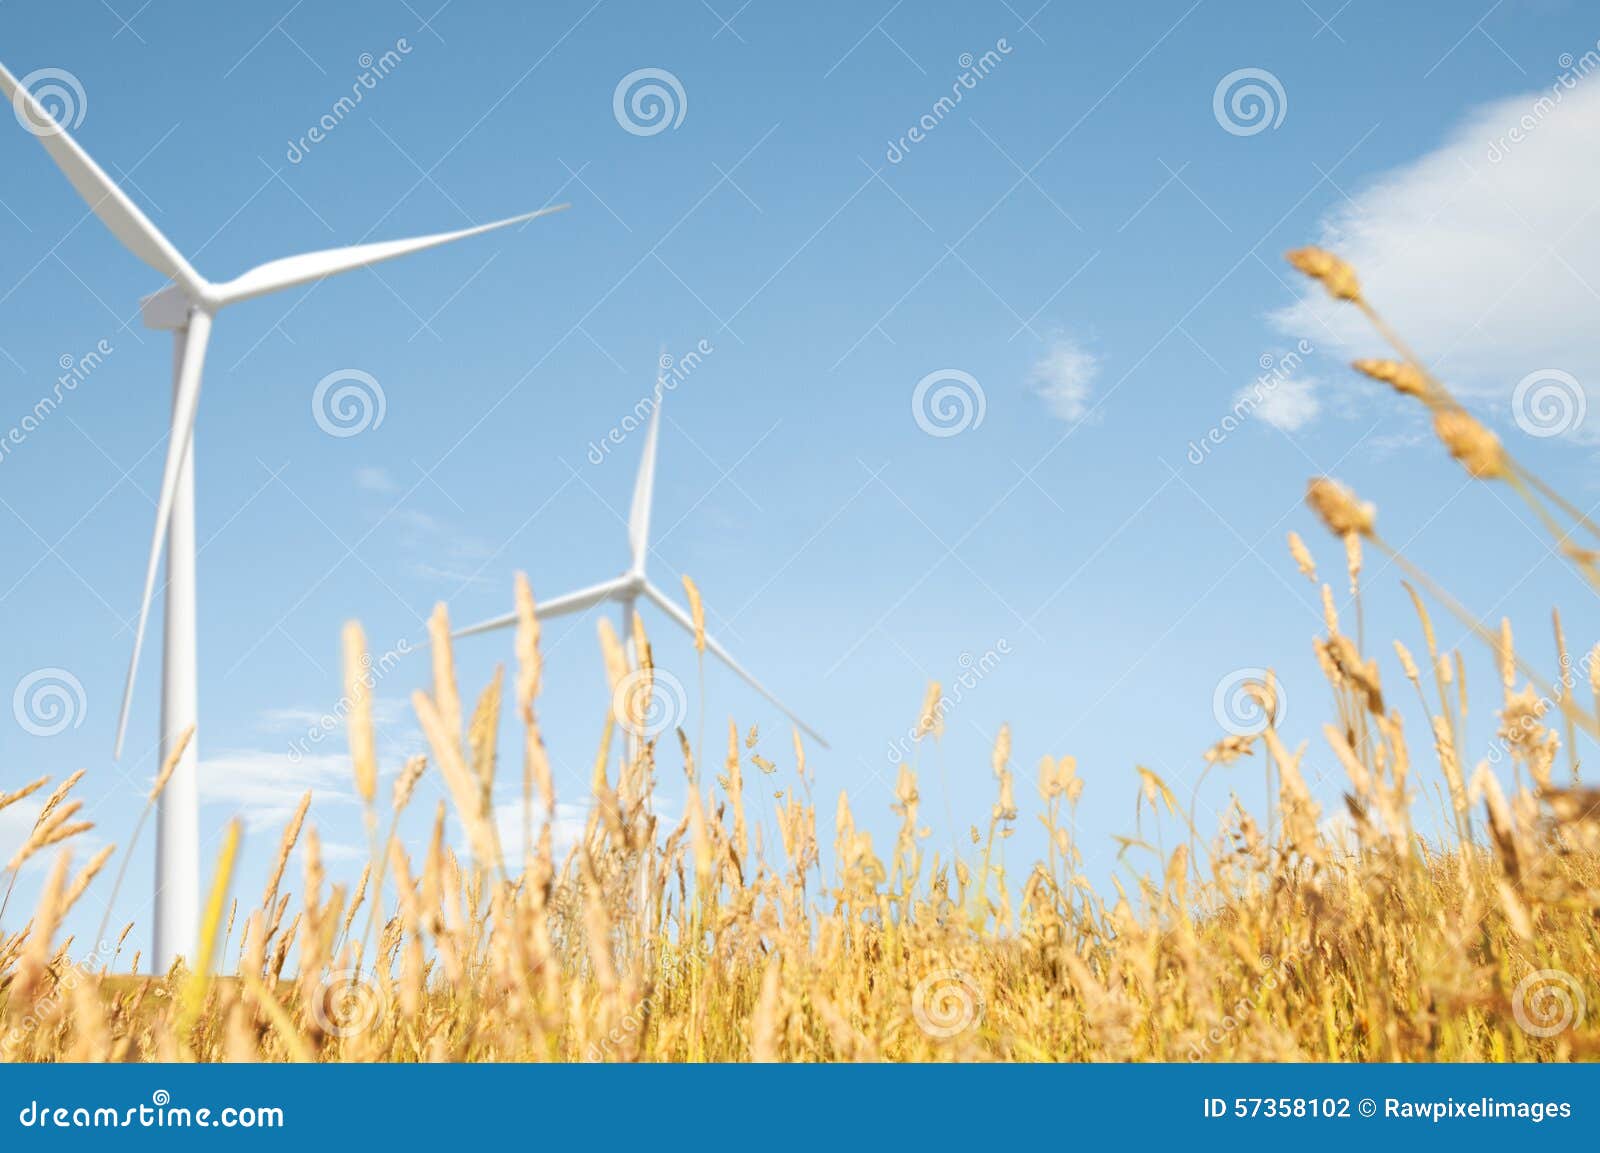 windmill grassland field hill natural scenics concept